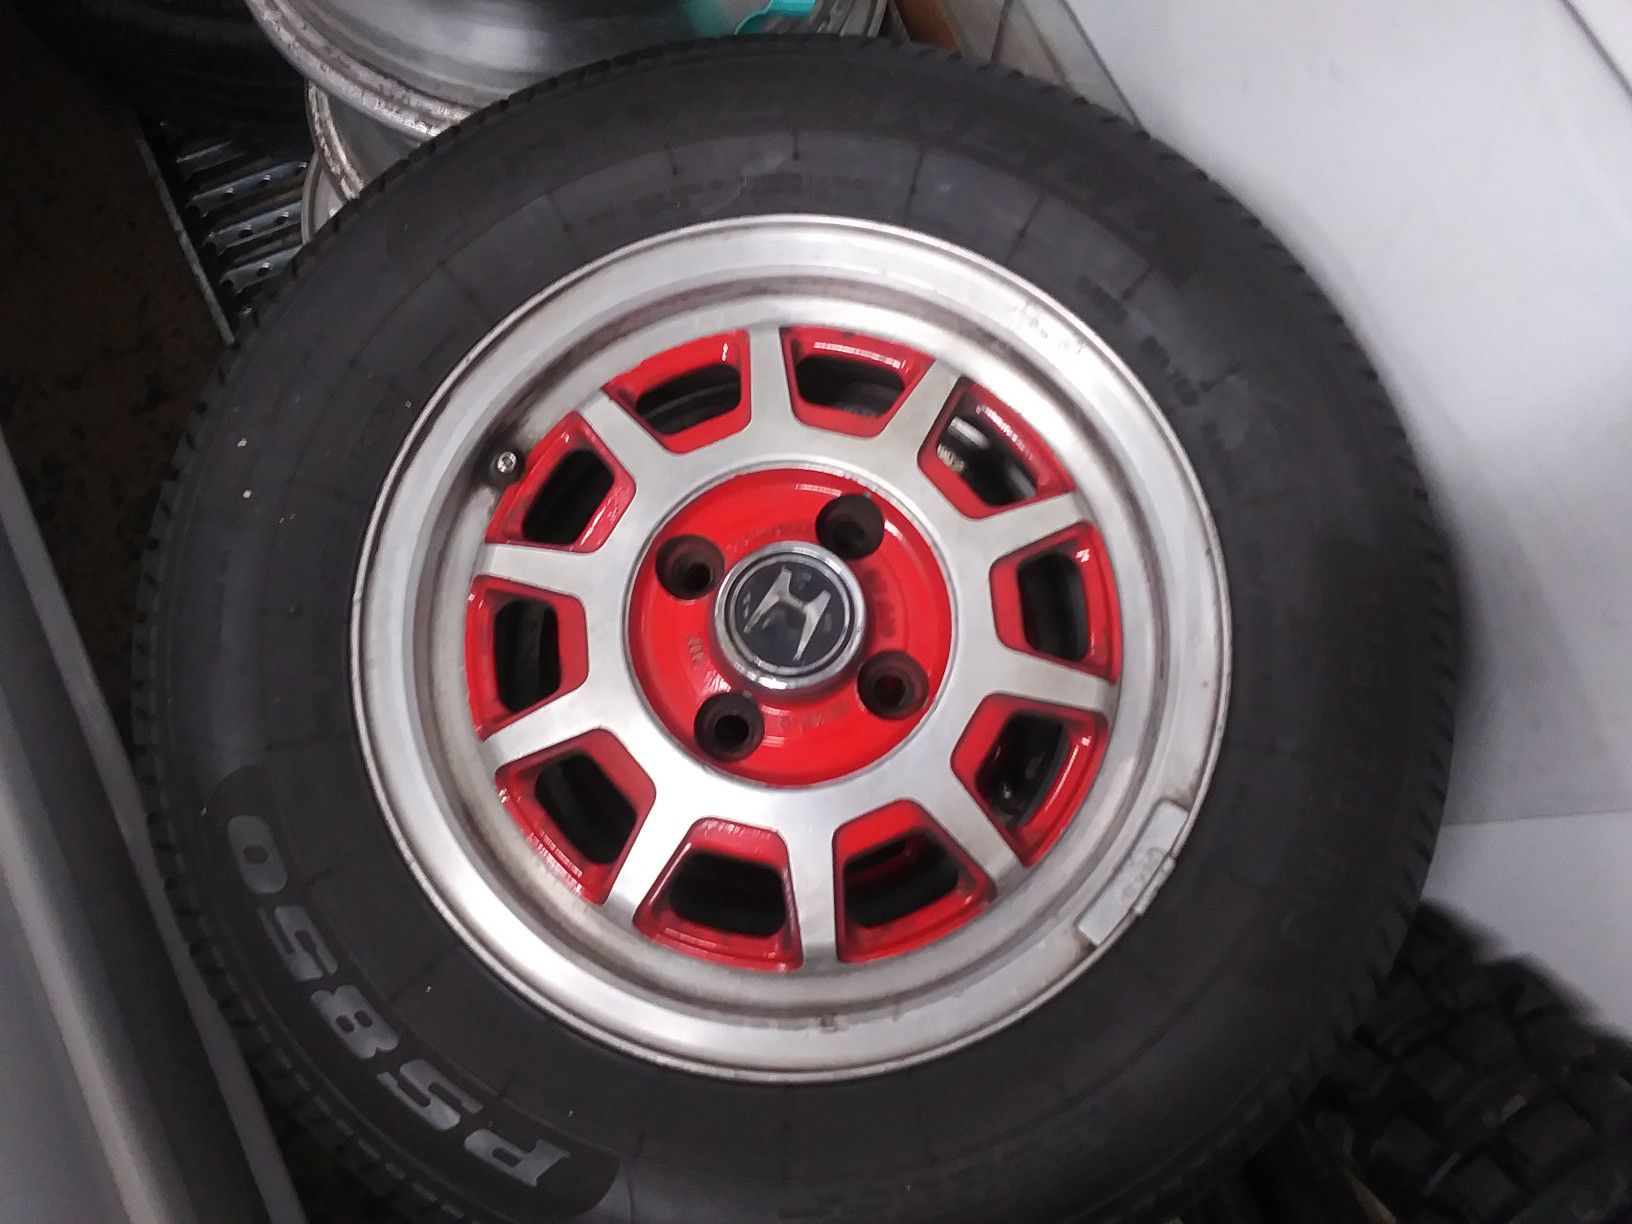 Honda civic 13" OEM alloys w new tires